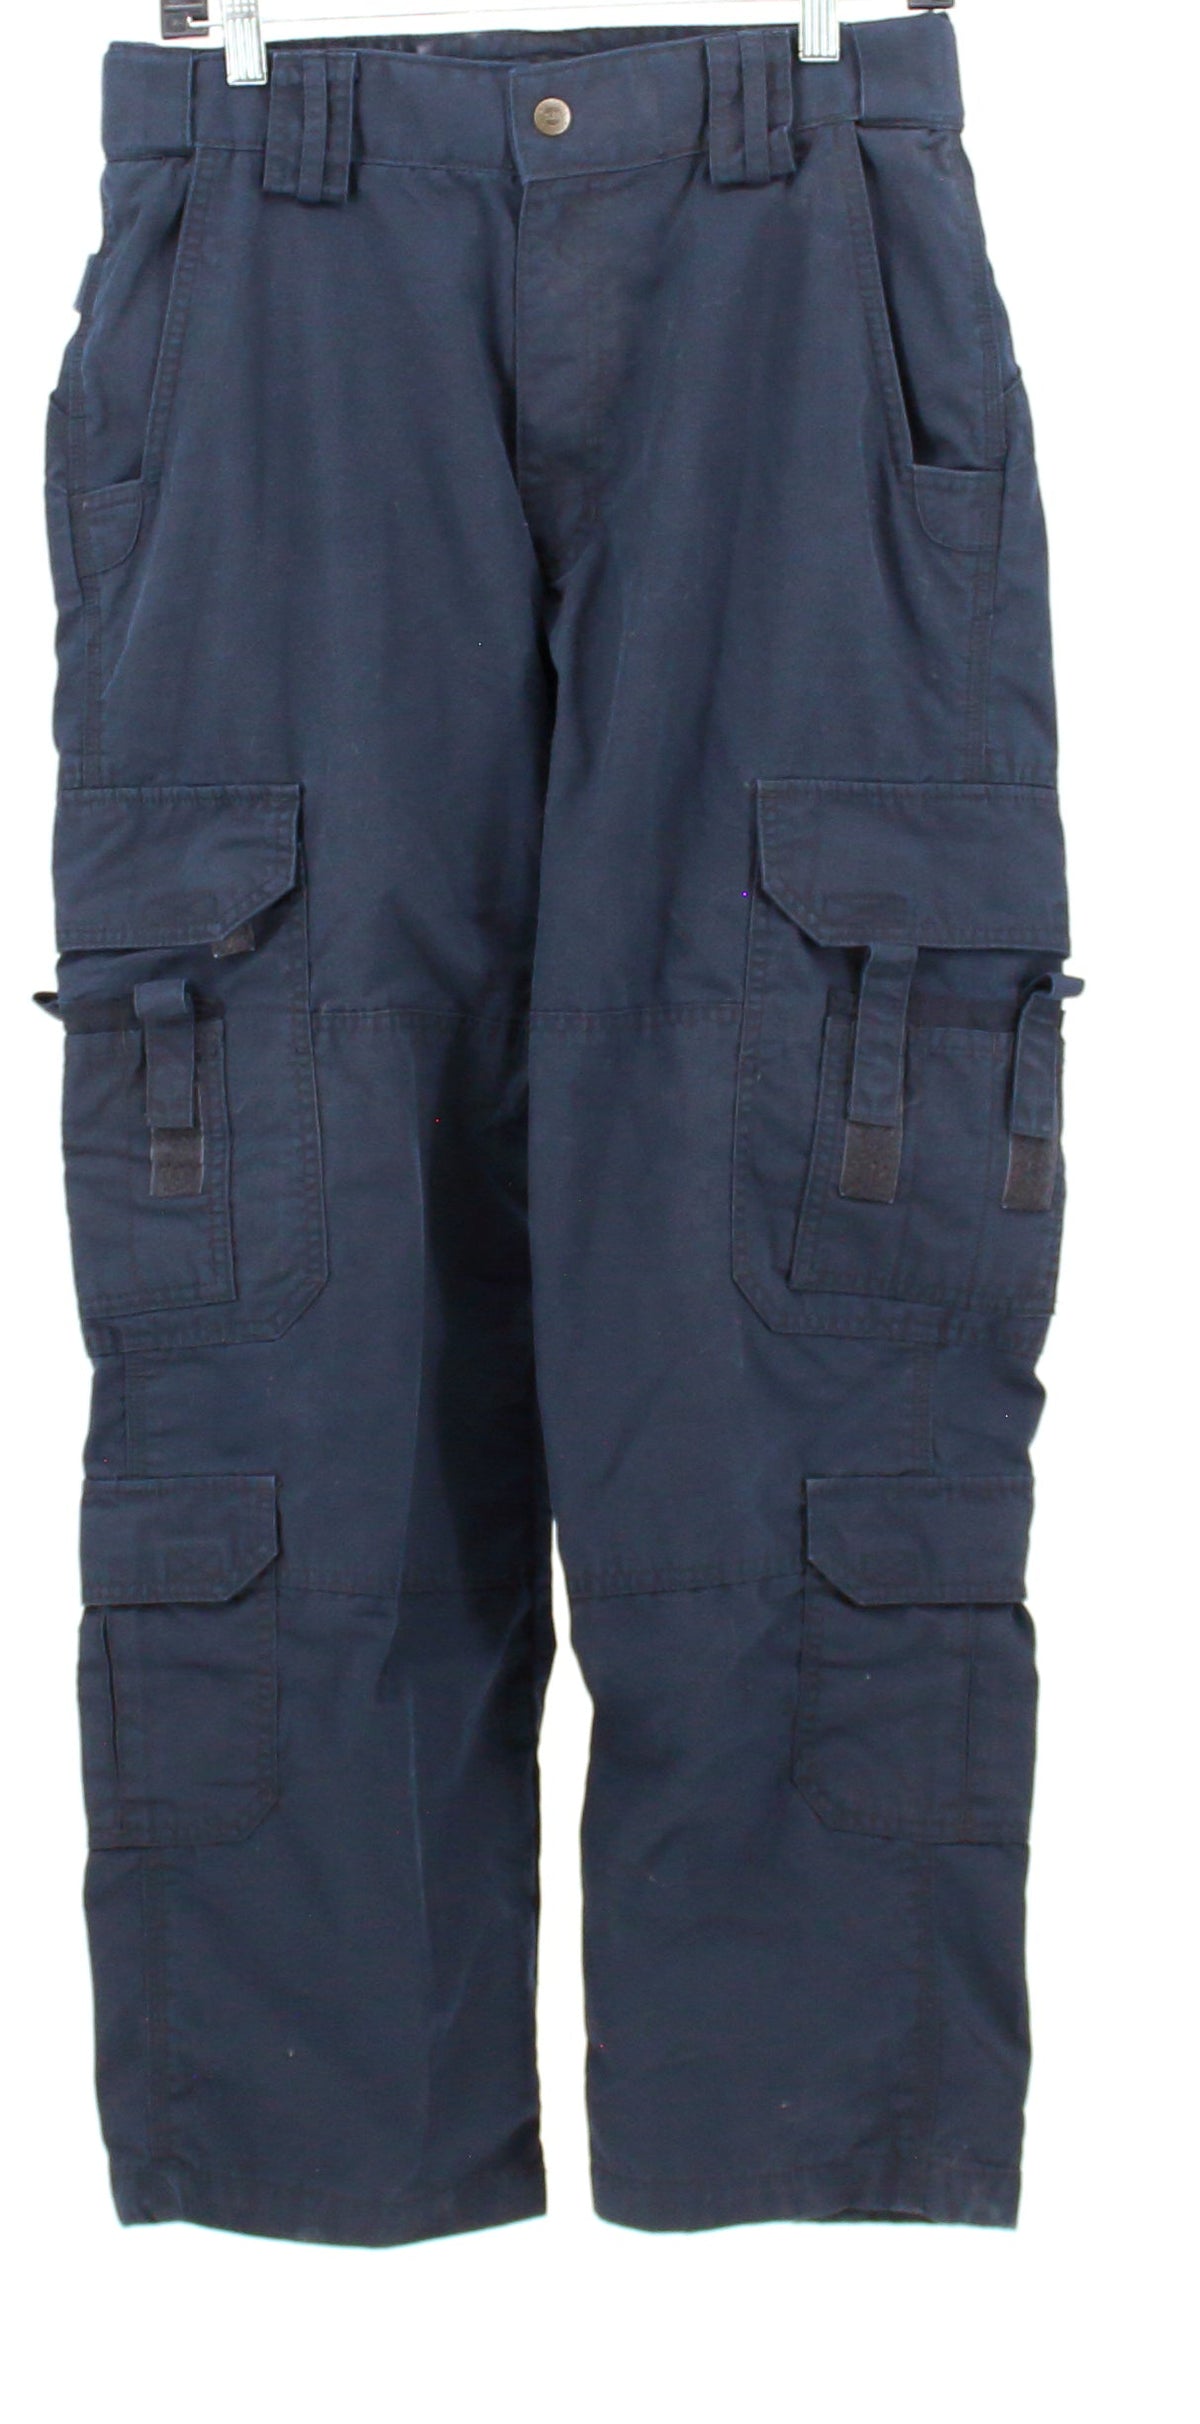 5.11 Tactical Series Navy Dungree Pants